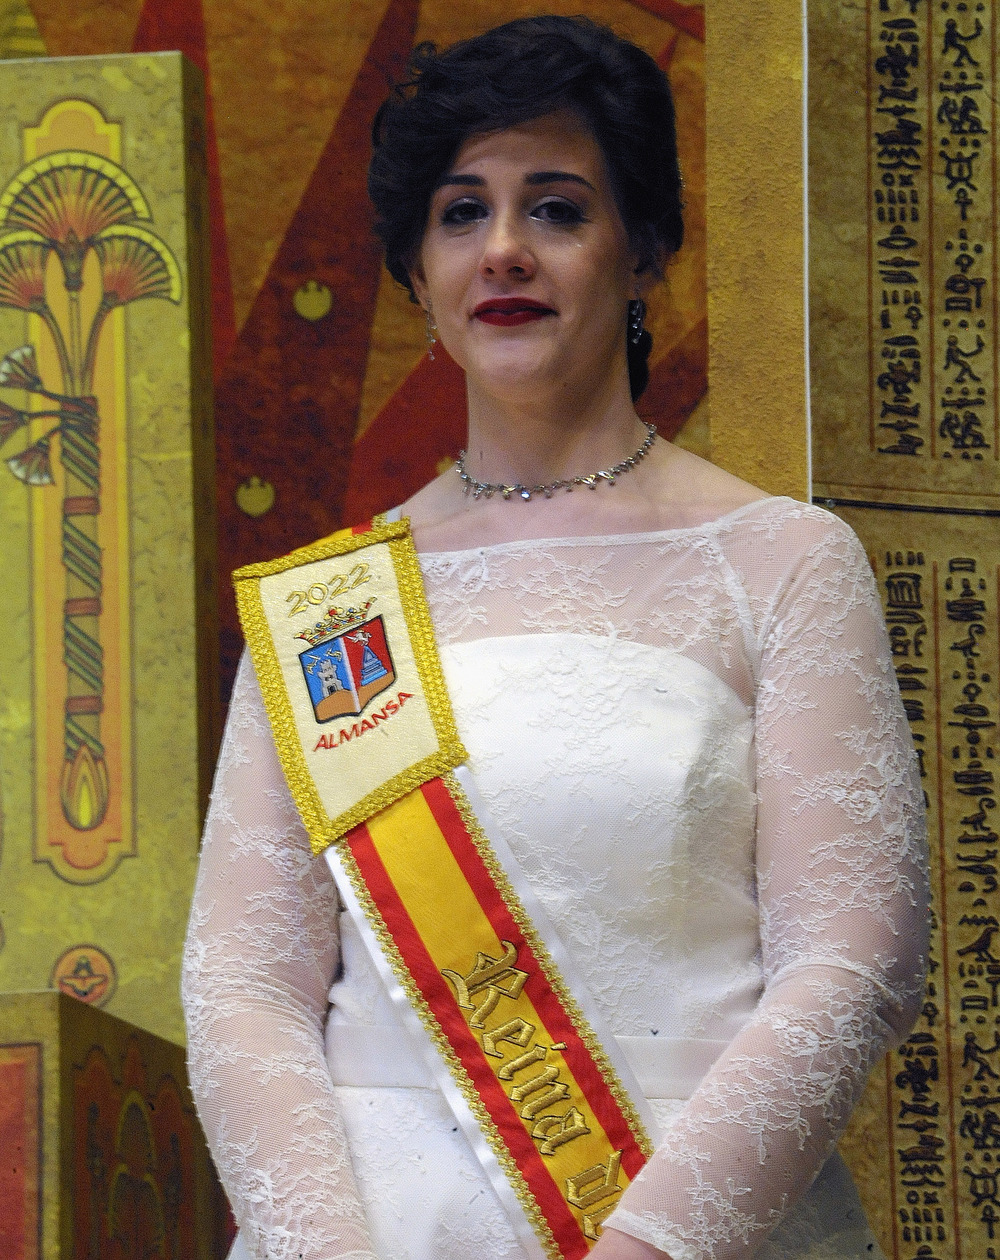 Belén Milán Moreno, reina de San Juan  / La Tribuna de Albacete